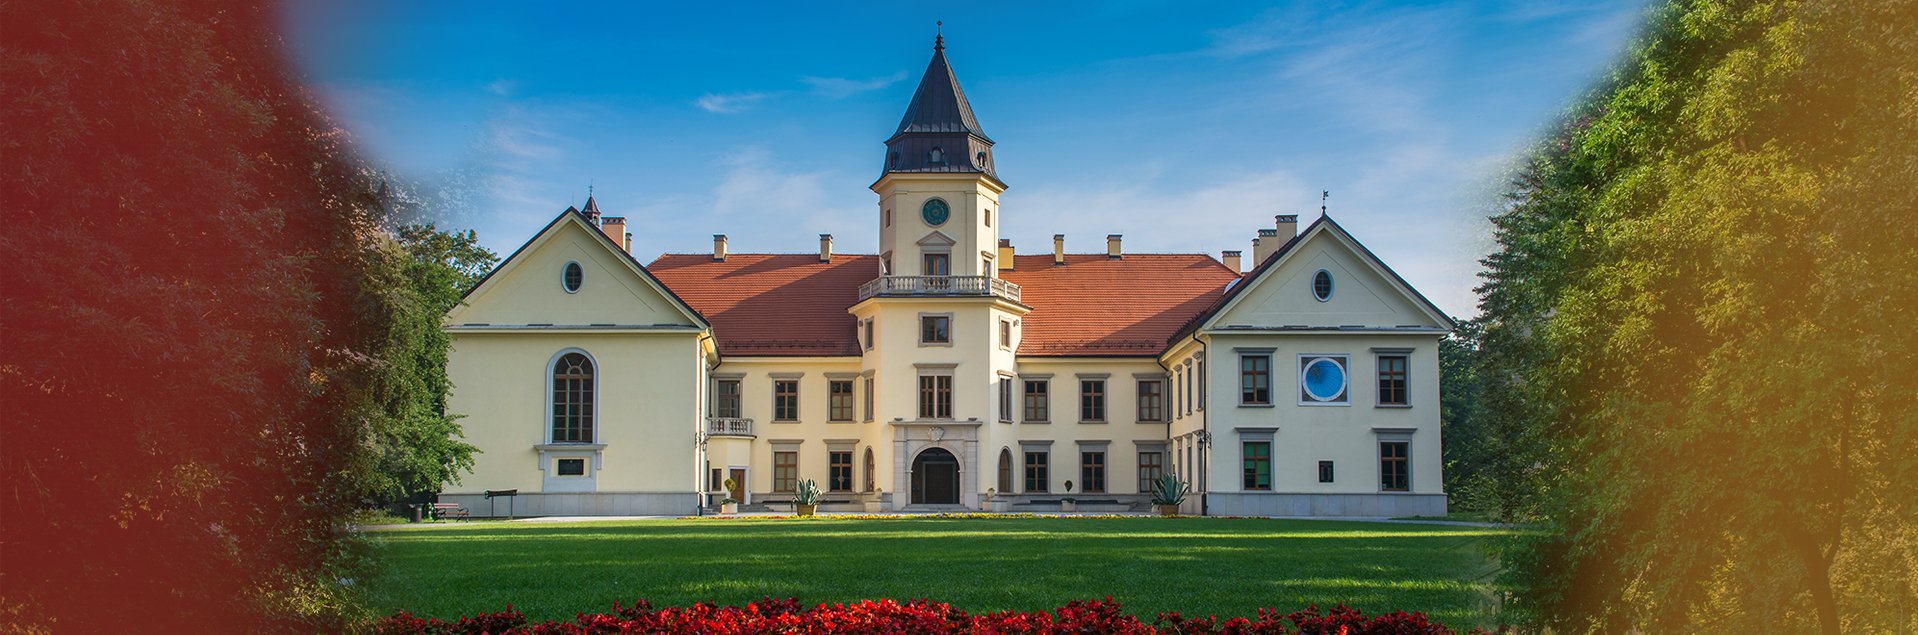 muzeum miasta tarnobrzega front